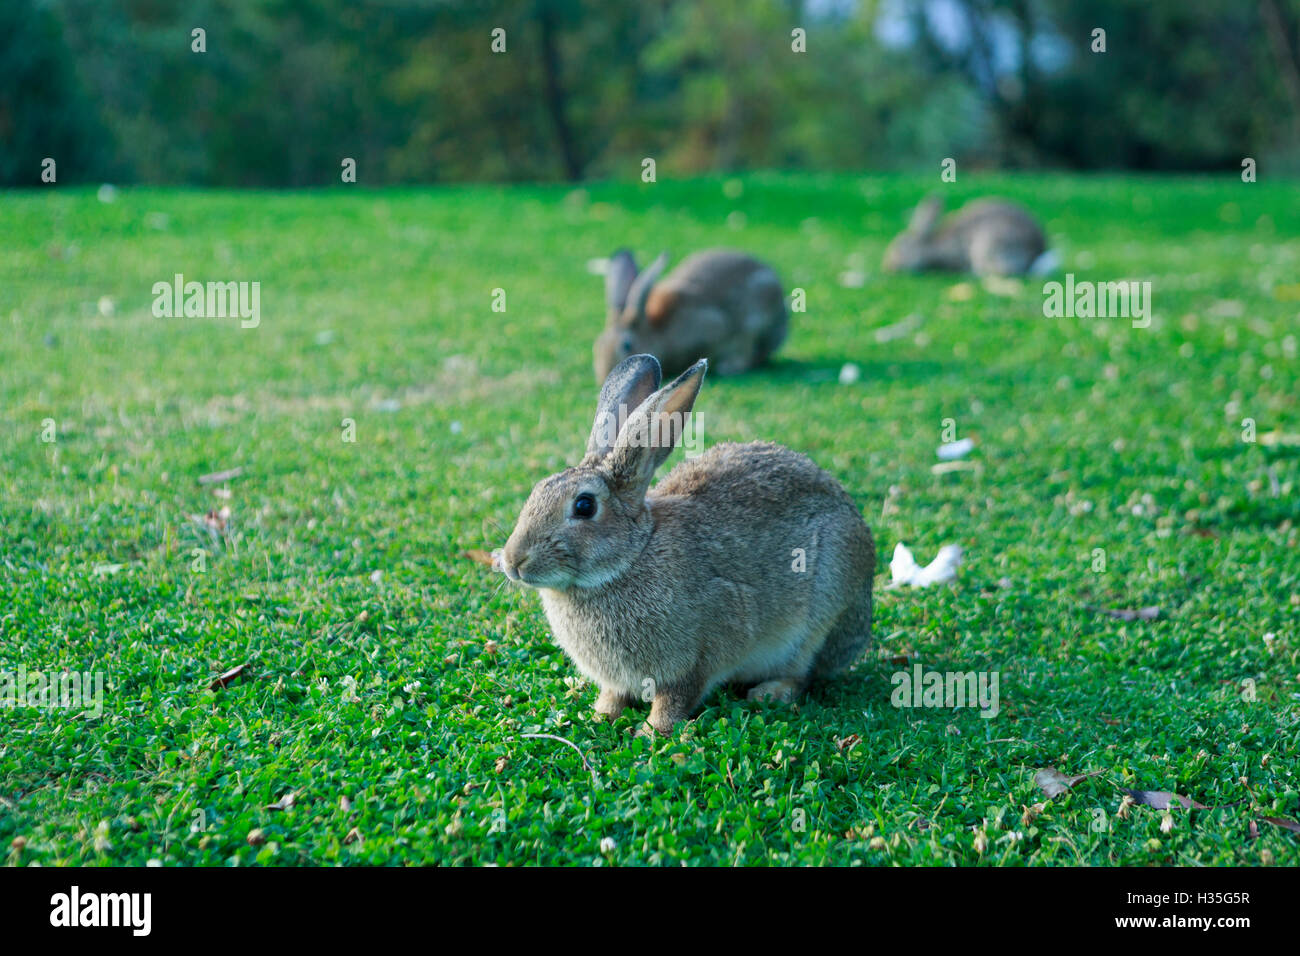 Andalusia, Spain. rabbits are grassing in Sierra de Grazalema Natural Park. Pako Mera. Stock Photo